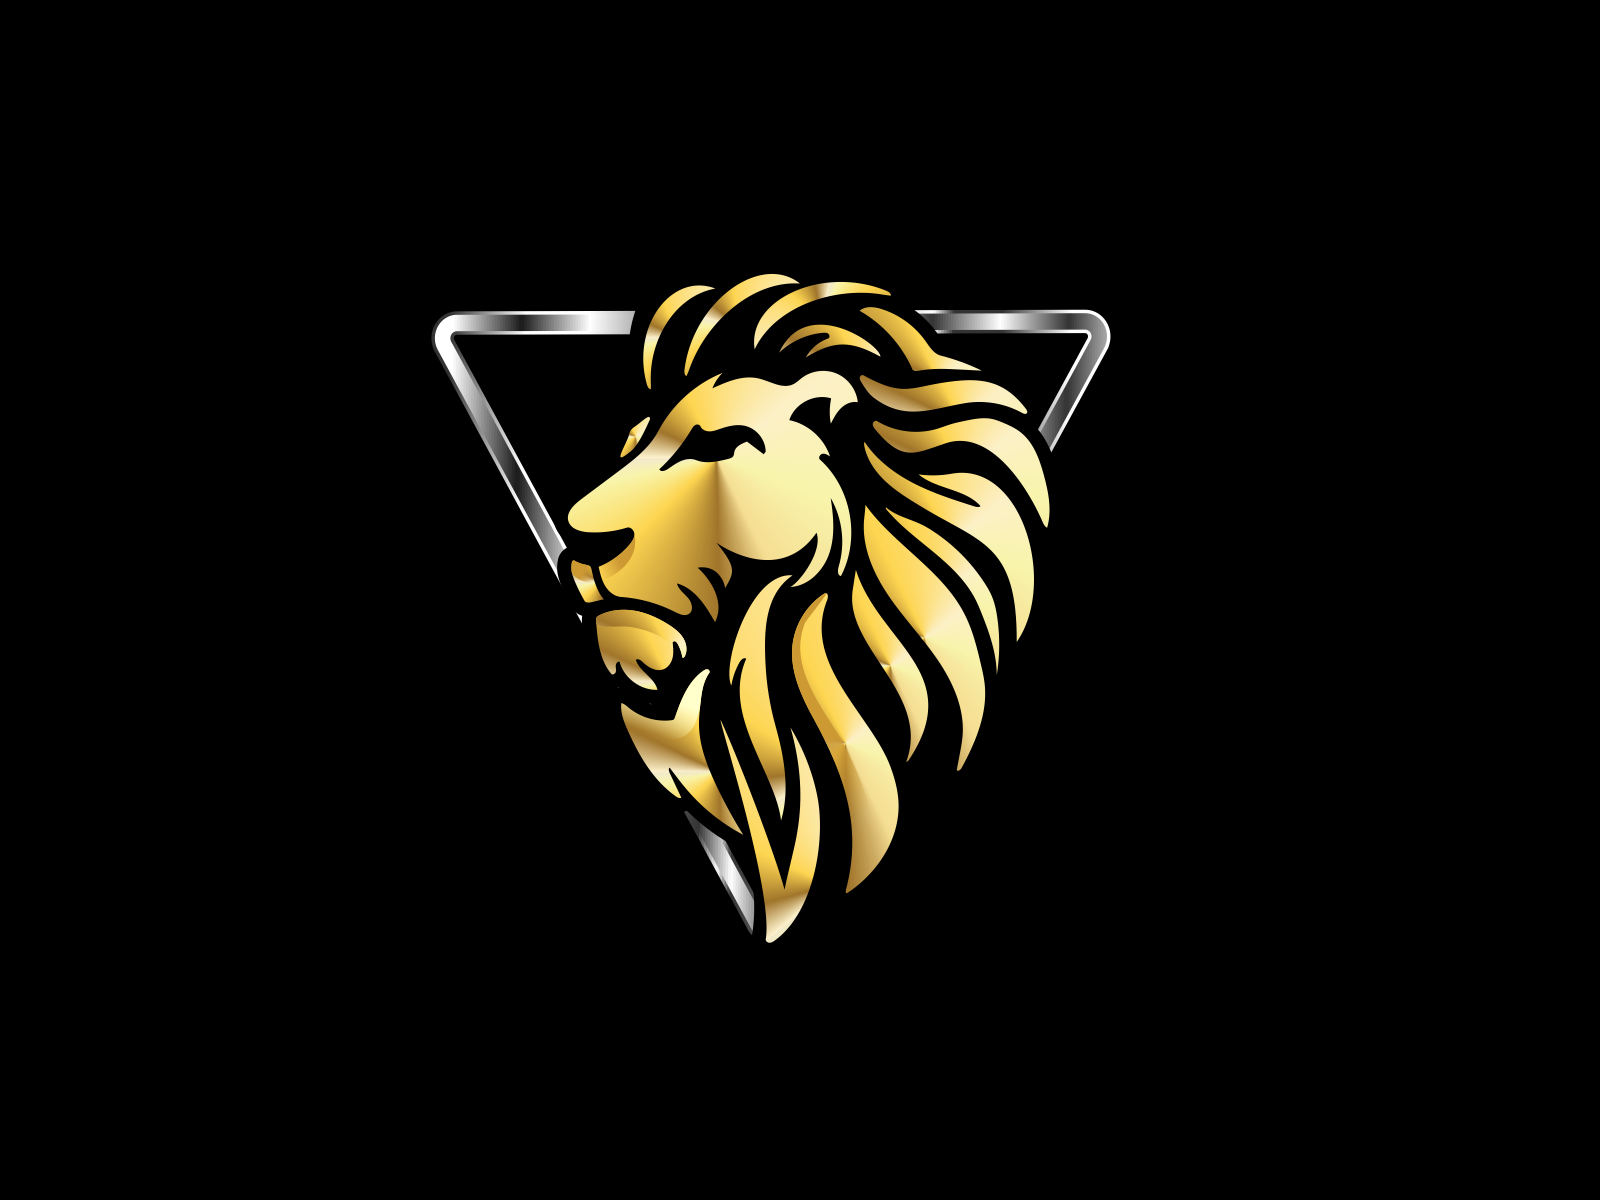 Lion Gold Logo Graphic by bondan80.bw · Creative Fabrica